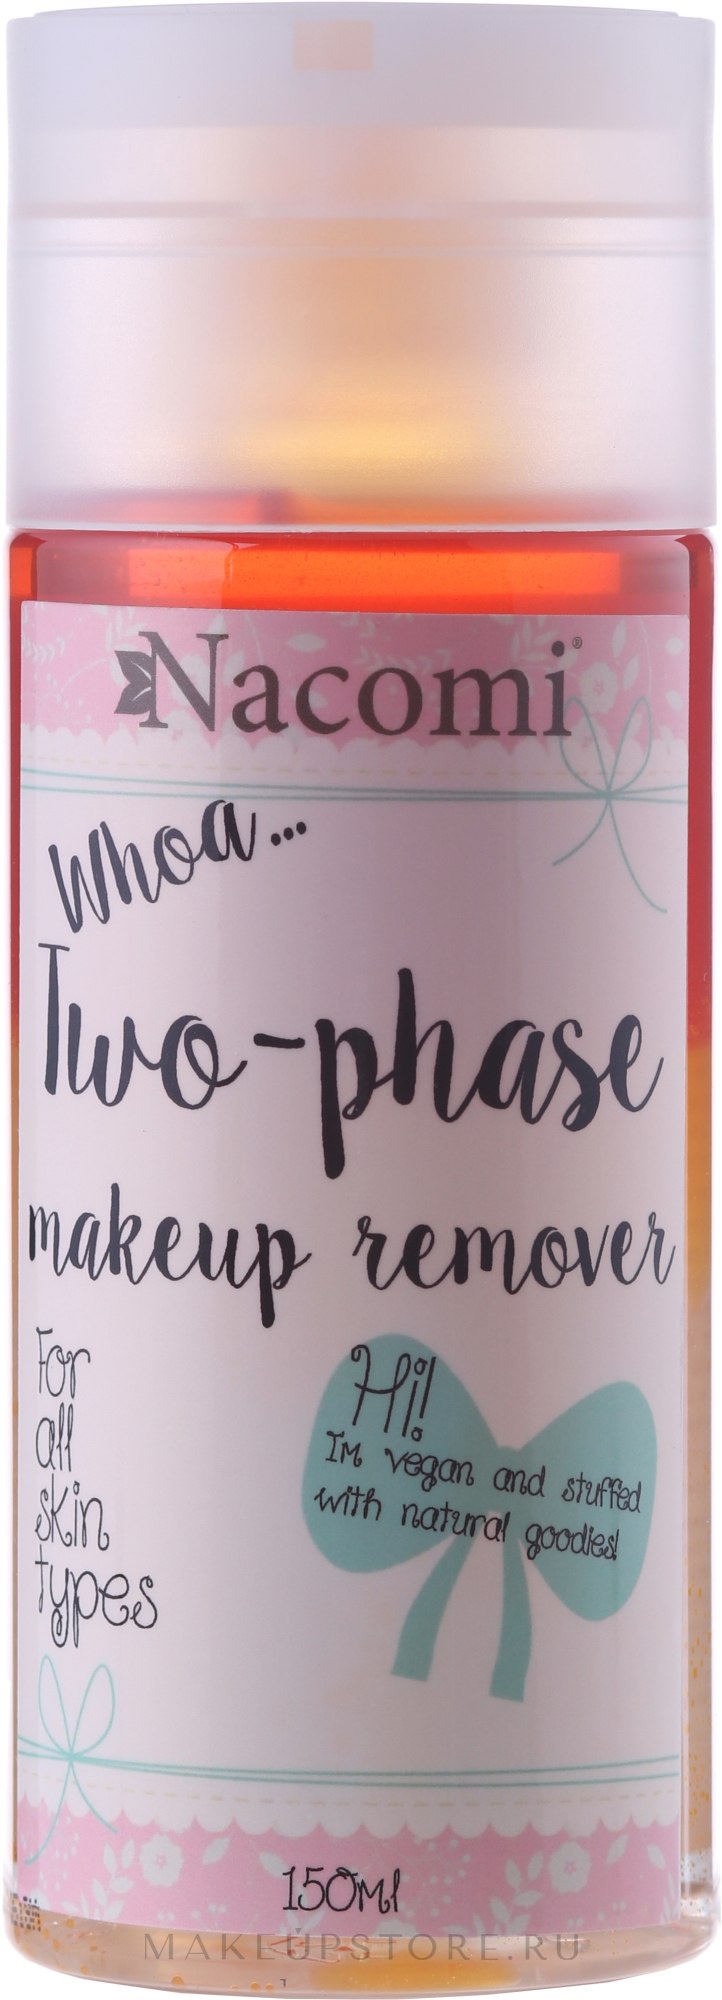 фото Средство для снятия макияжа Nacomi Two-phase makeup remover, 150 мл